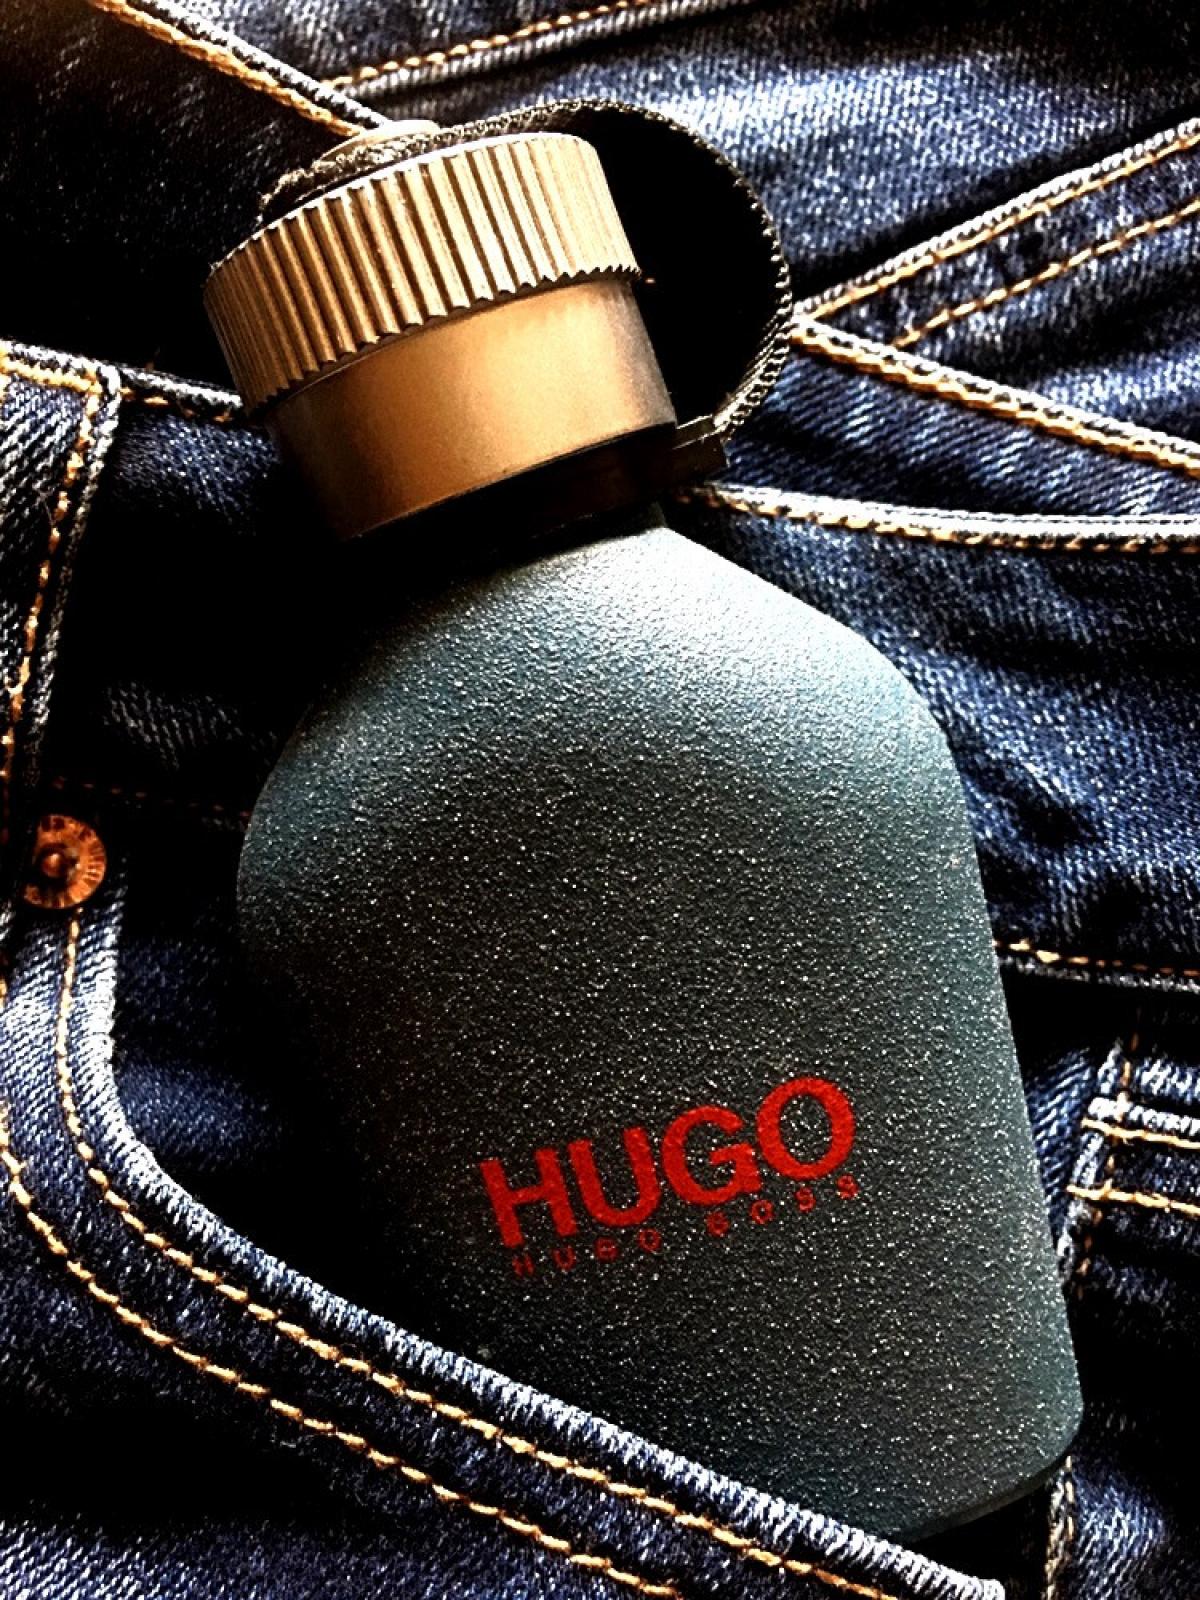 hugo boss parfum urban journey